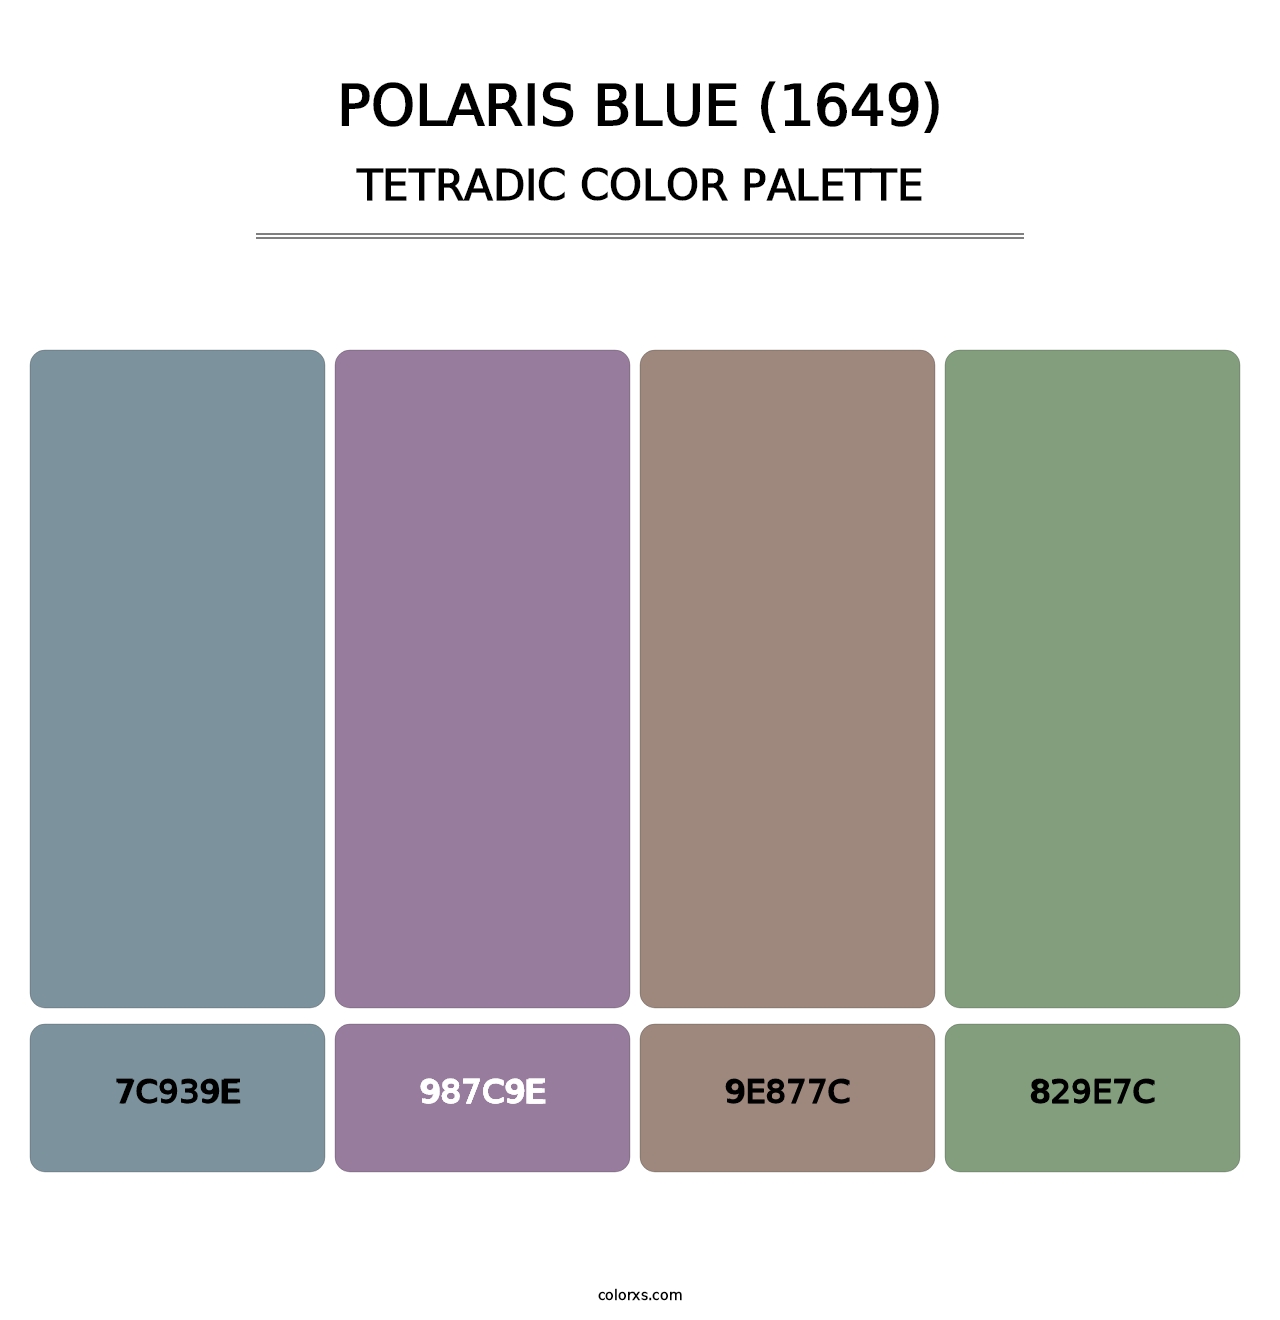 Polaris Blue (1649) - Tetradic Color Palette